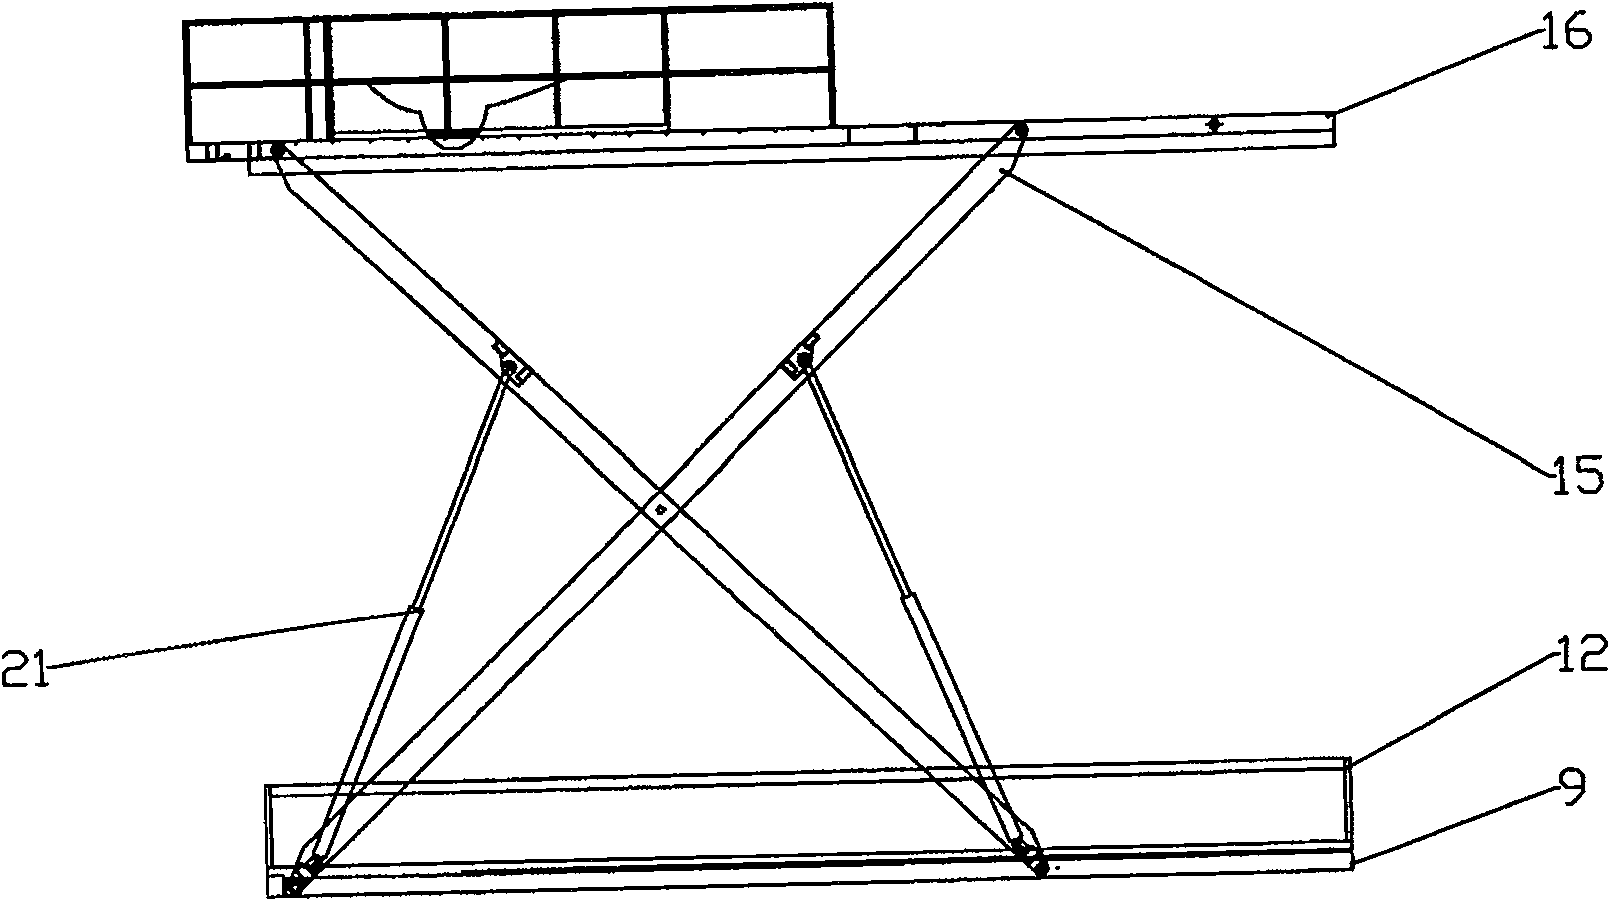 Ladder vehicle of ship